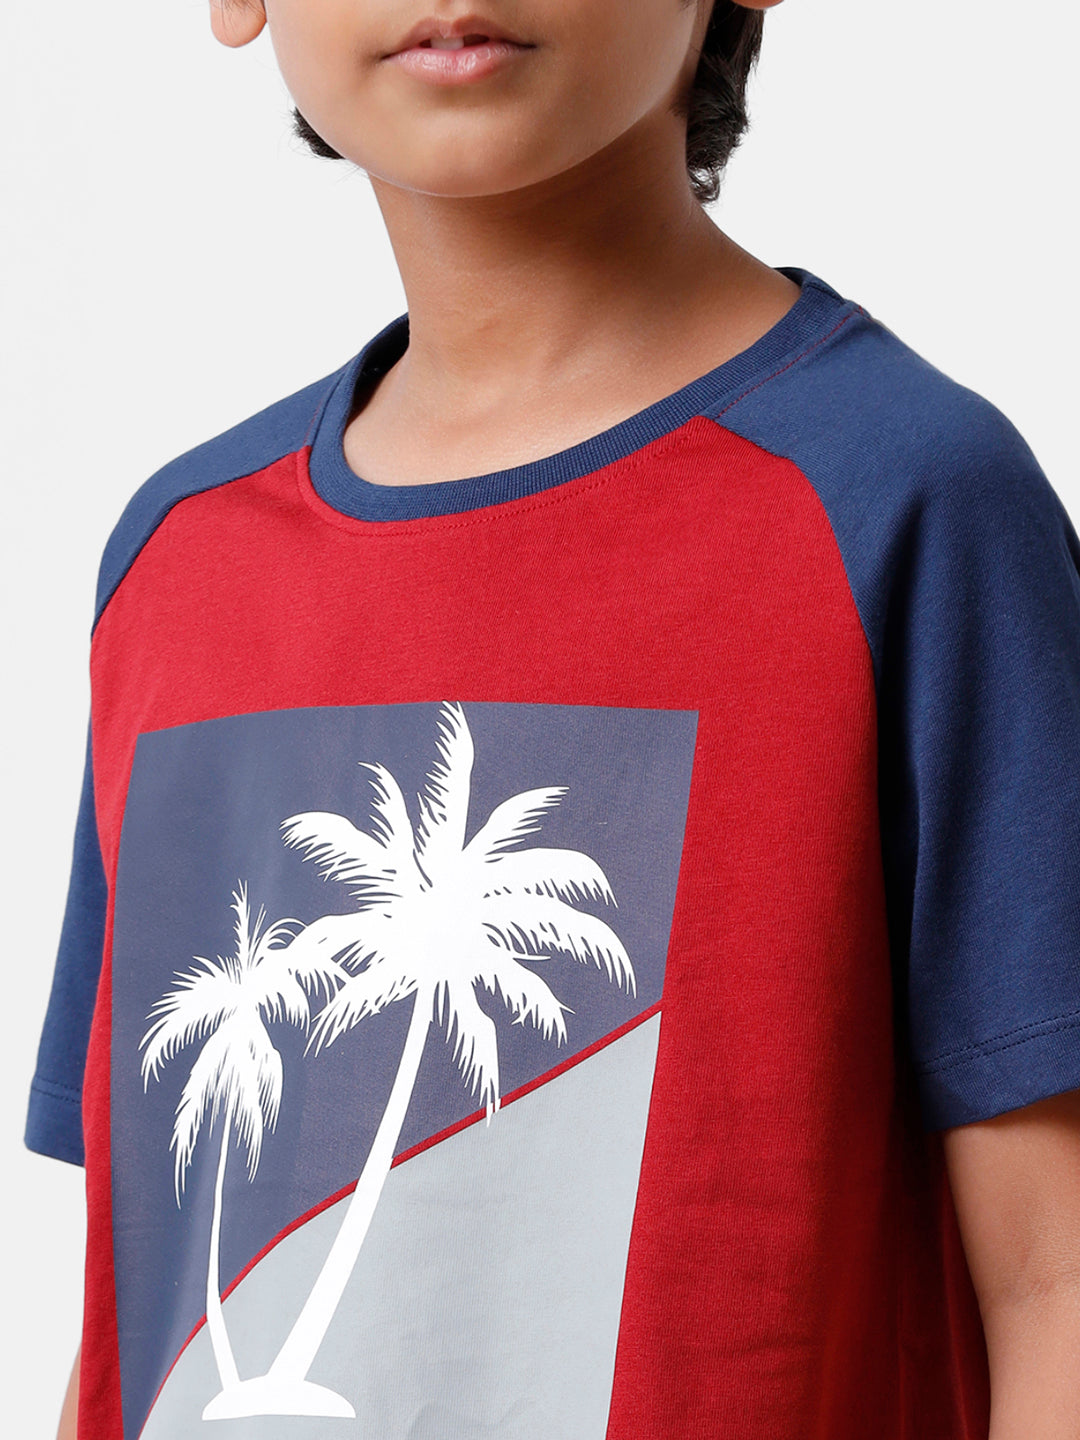 Kids - Boys Printed Half Sleeve T-Shirt Maroon